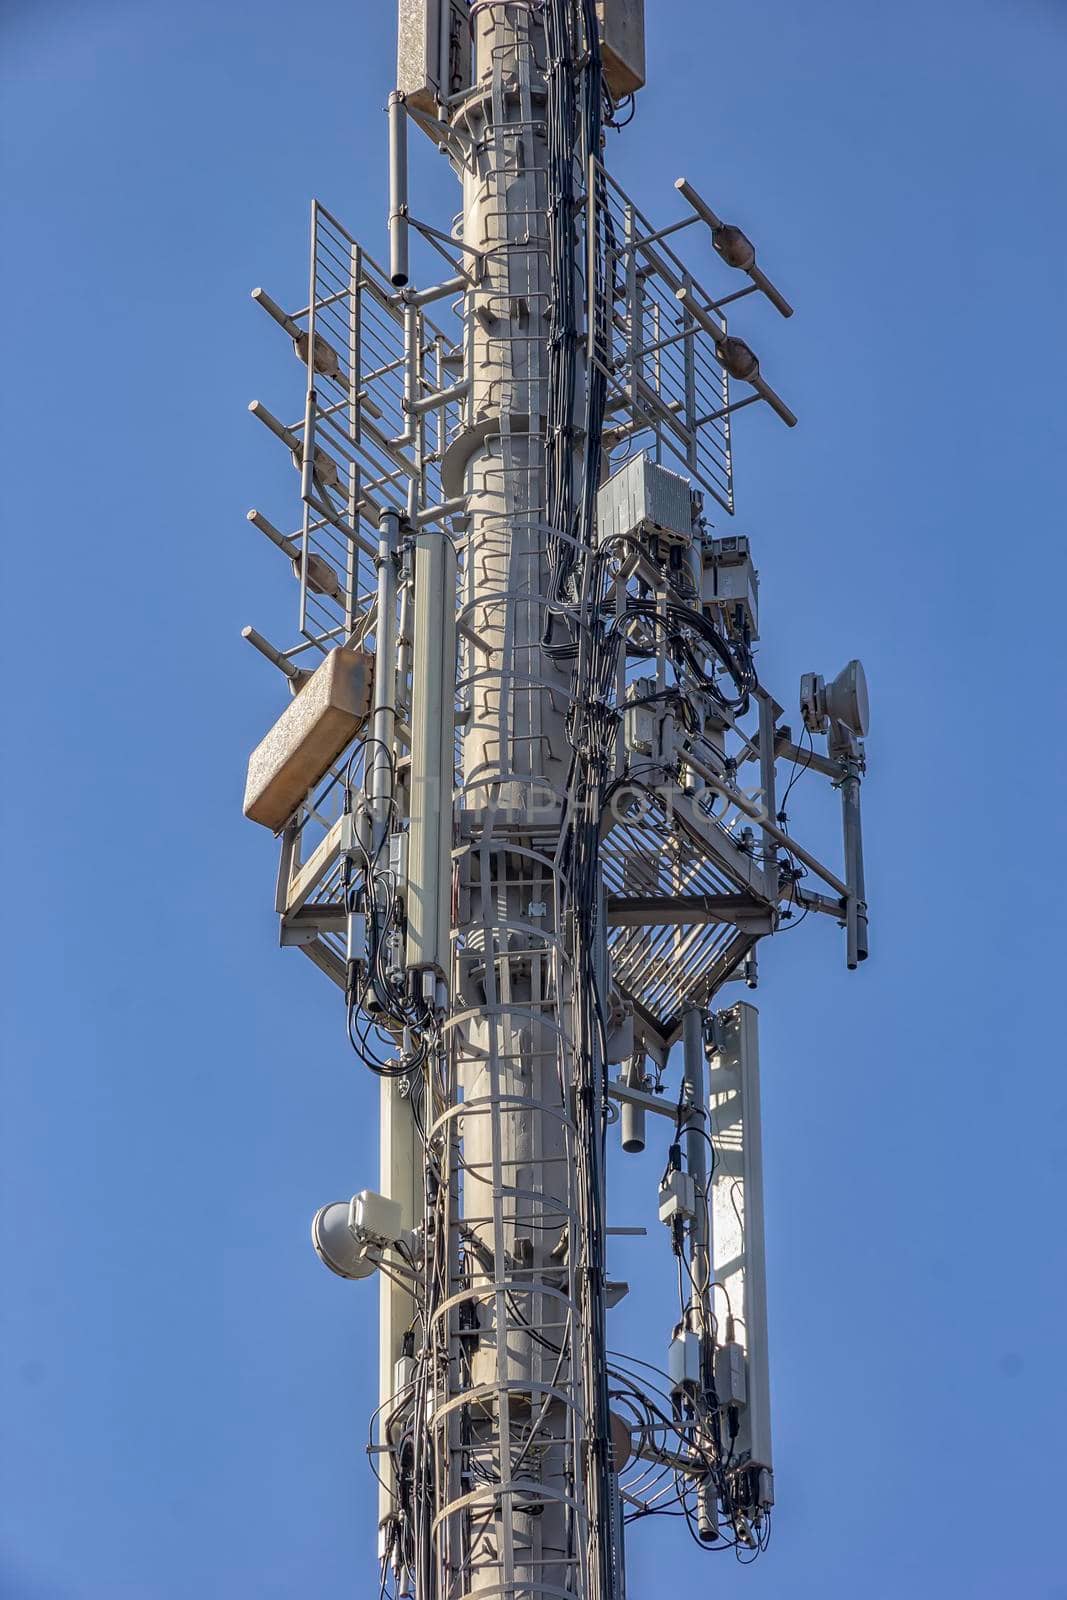 A part of GSM Transmitter Antenna tower. Vertical view